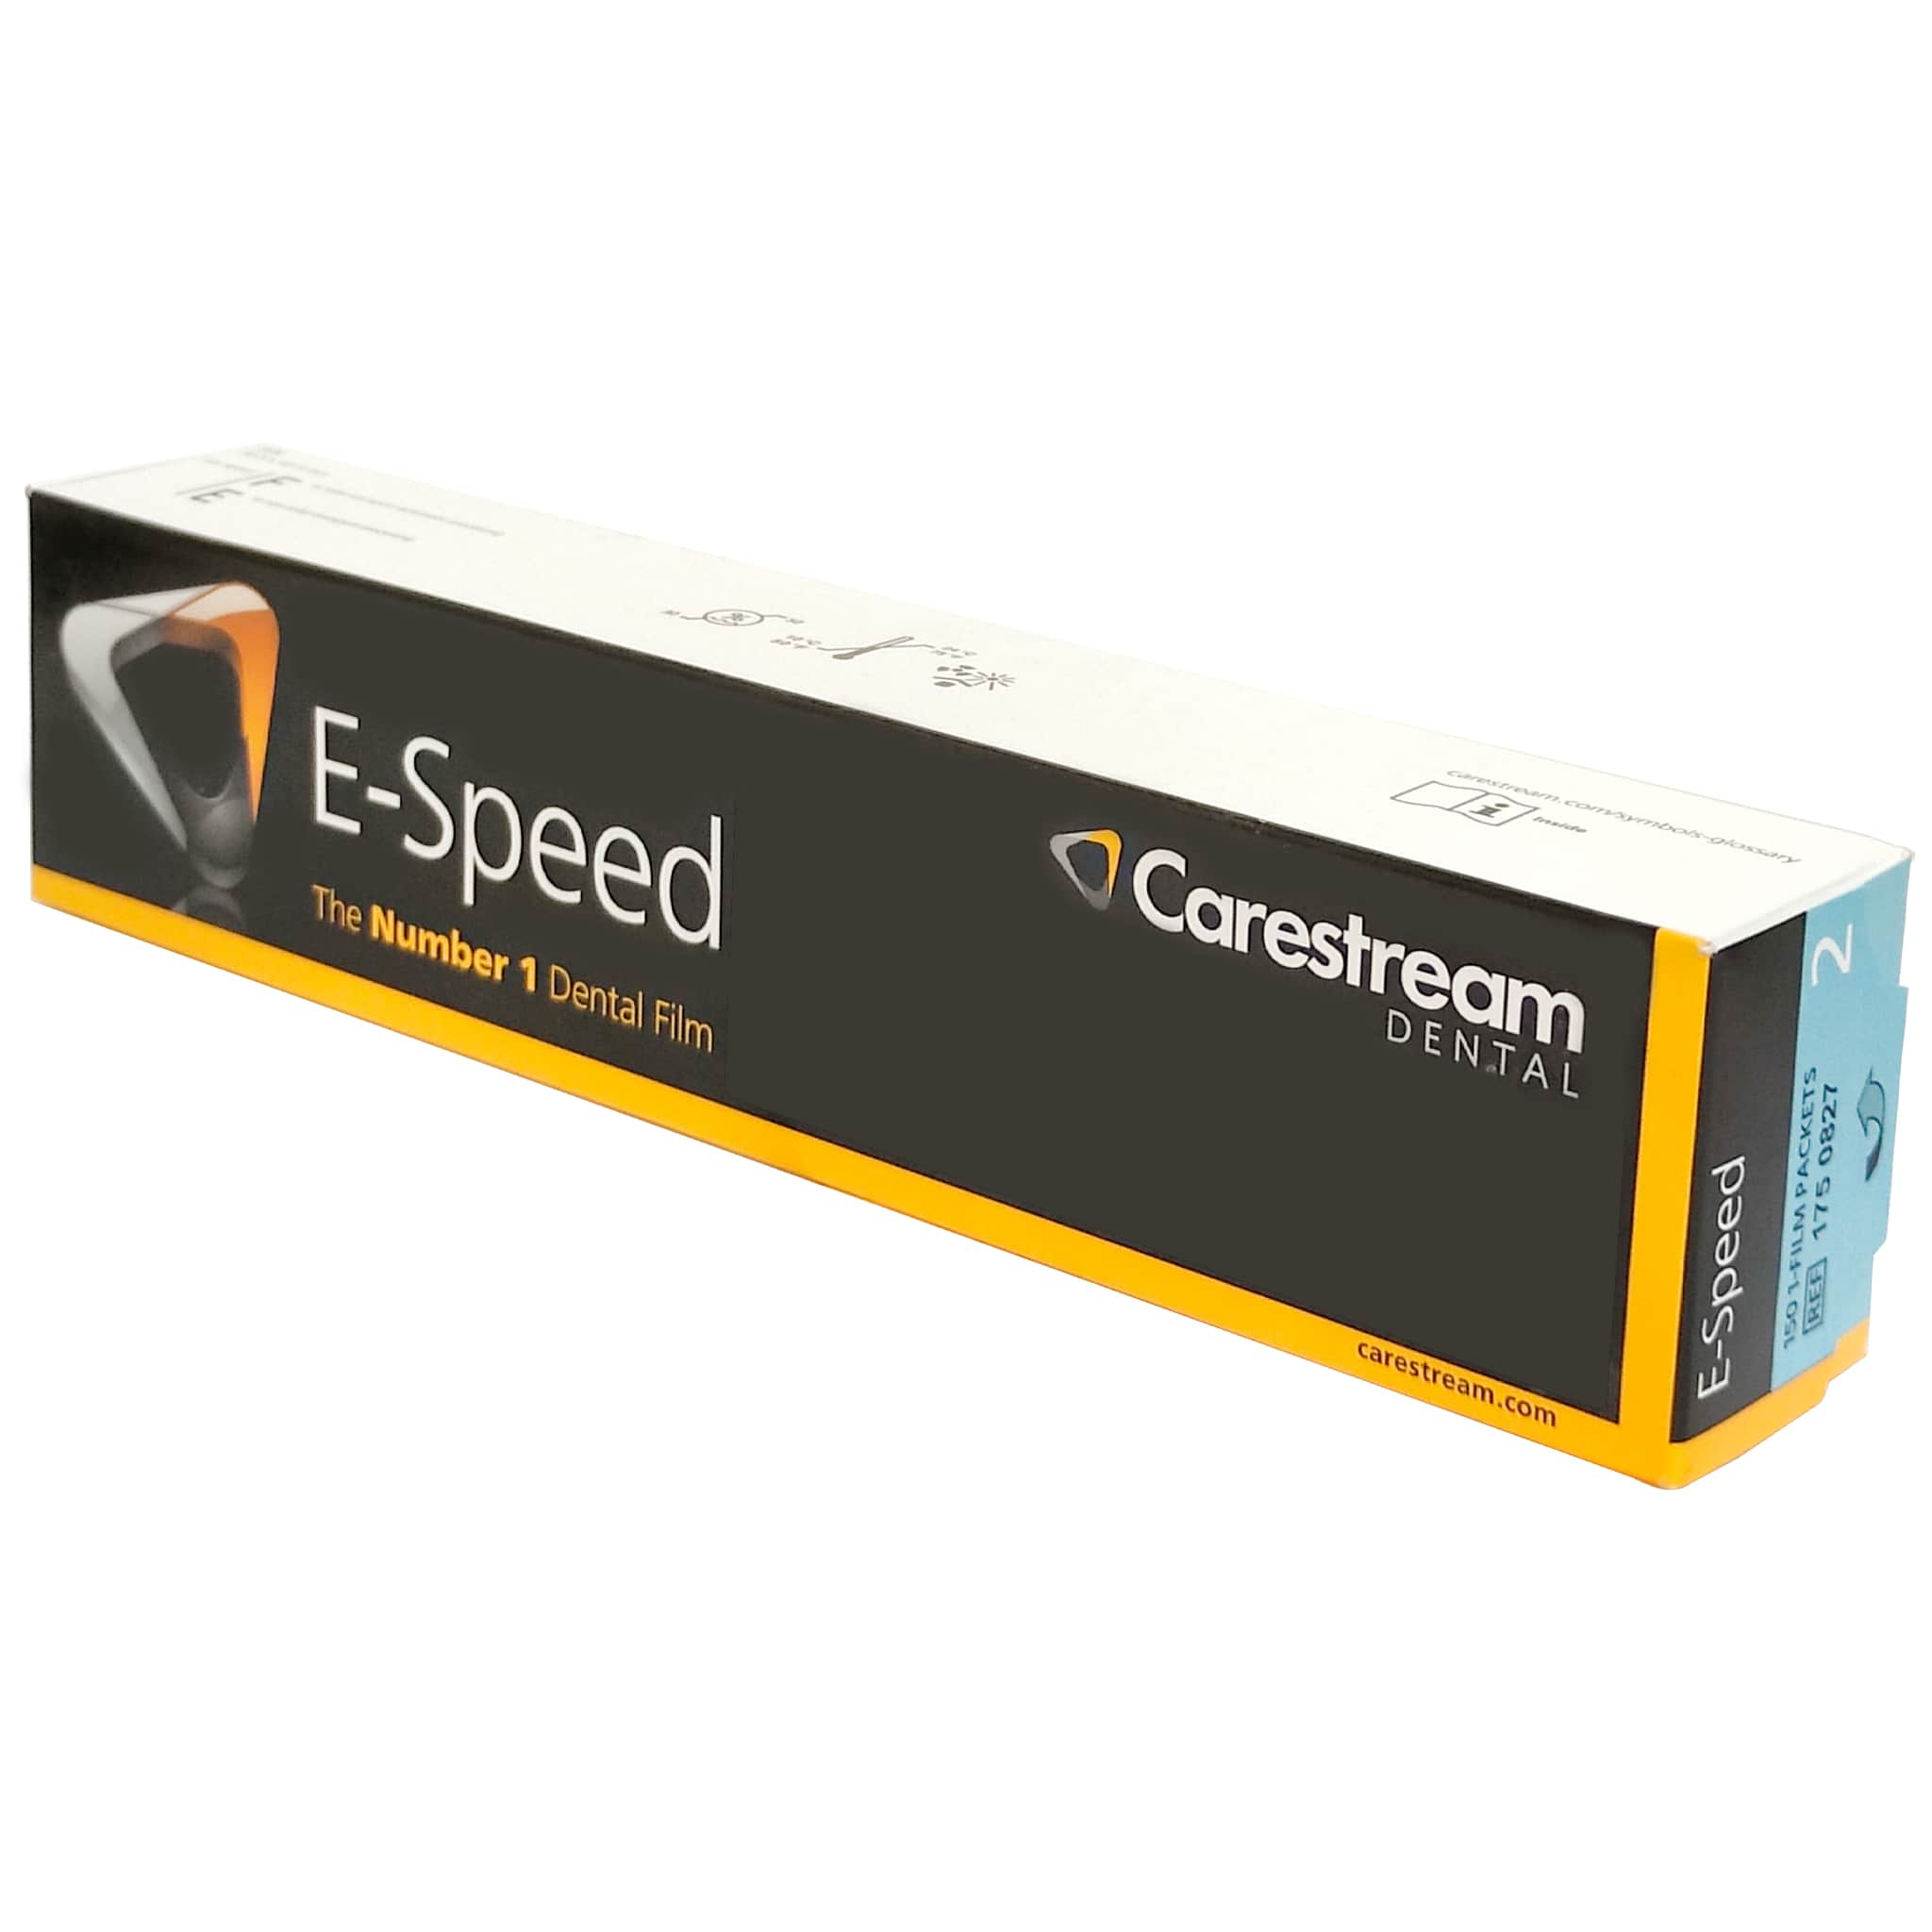 Kodak Carestream Dental E-Speed Intra Oral X-Ray Film